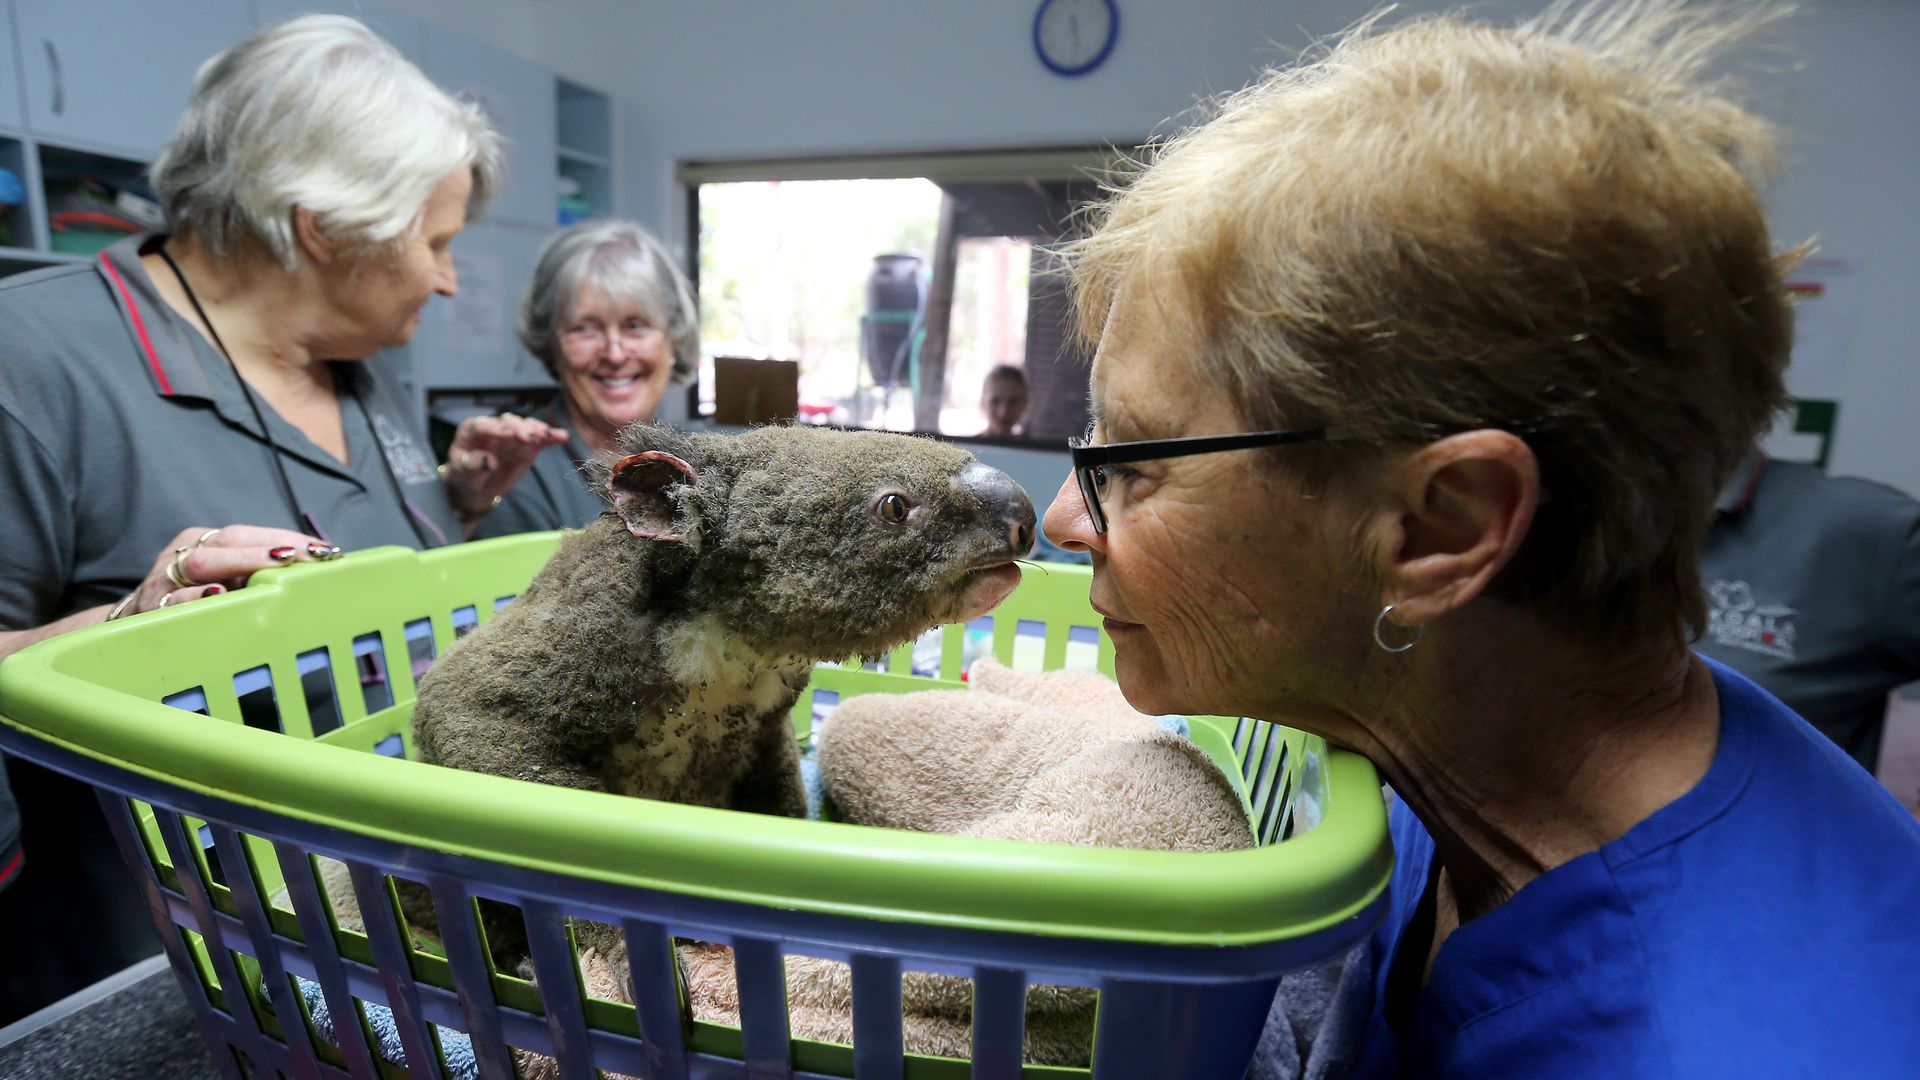 Koala recovering from burns at an animal hospital